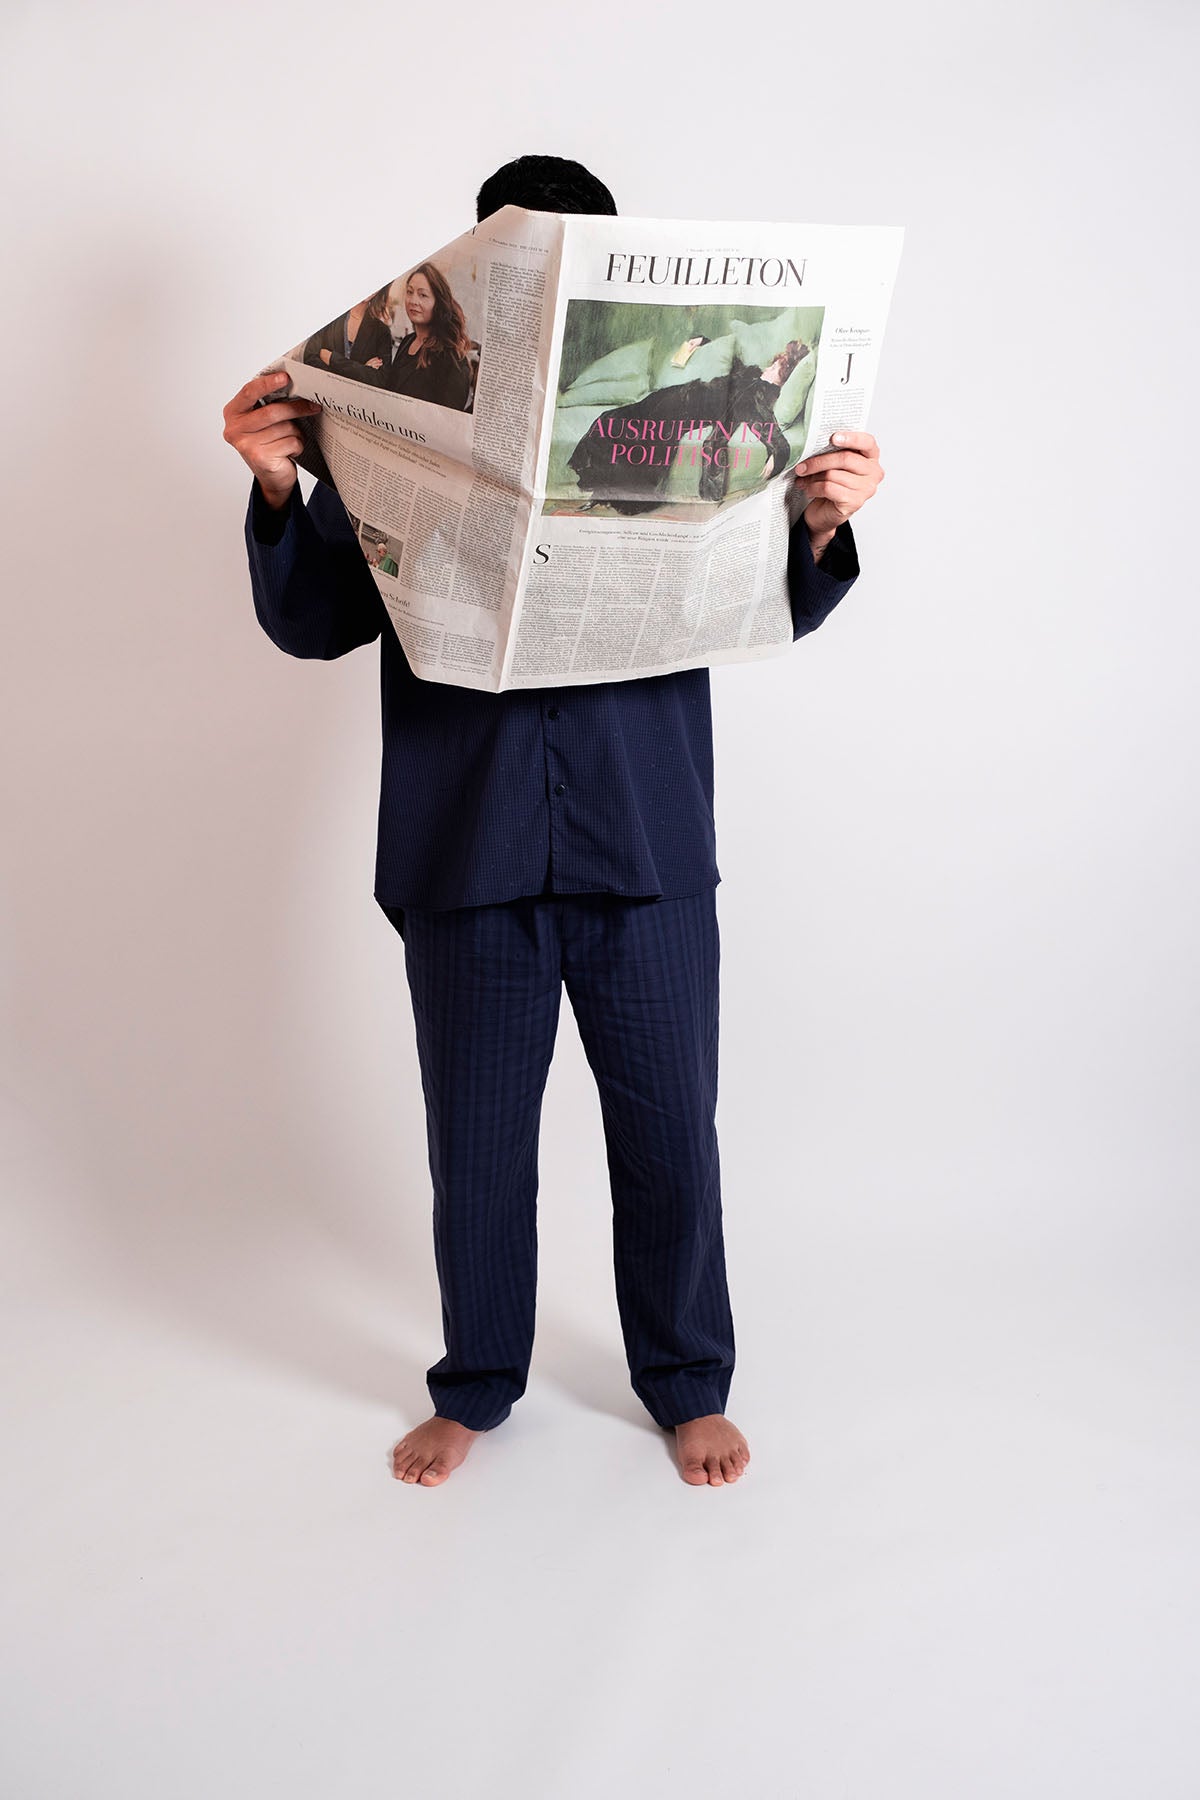 Man in Pyjama reading the newspaper